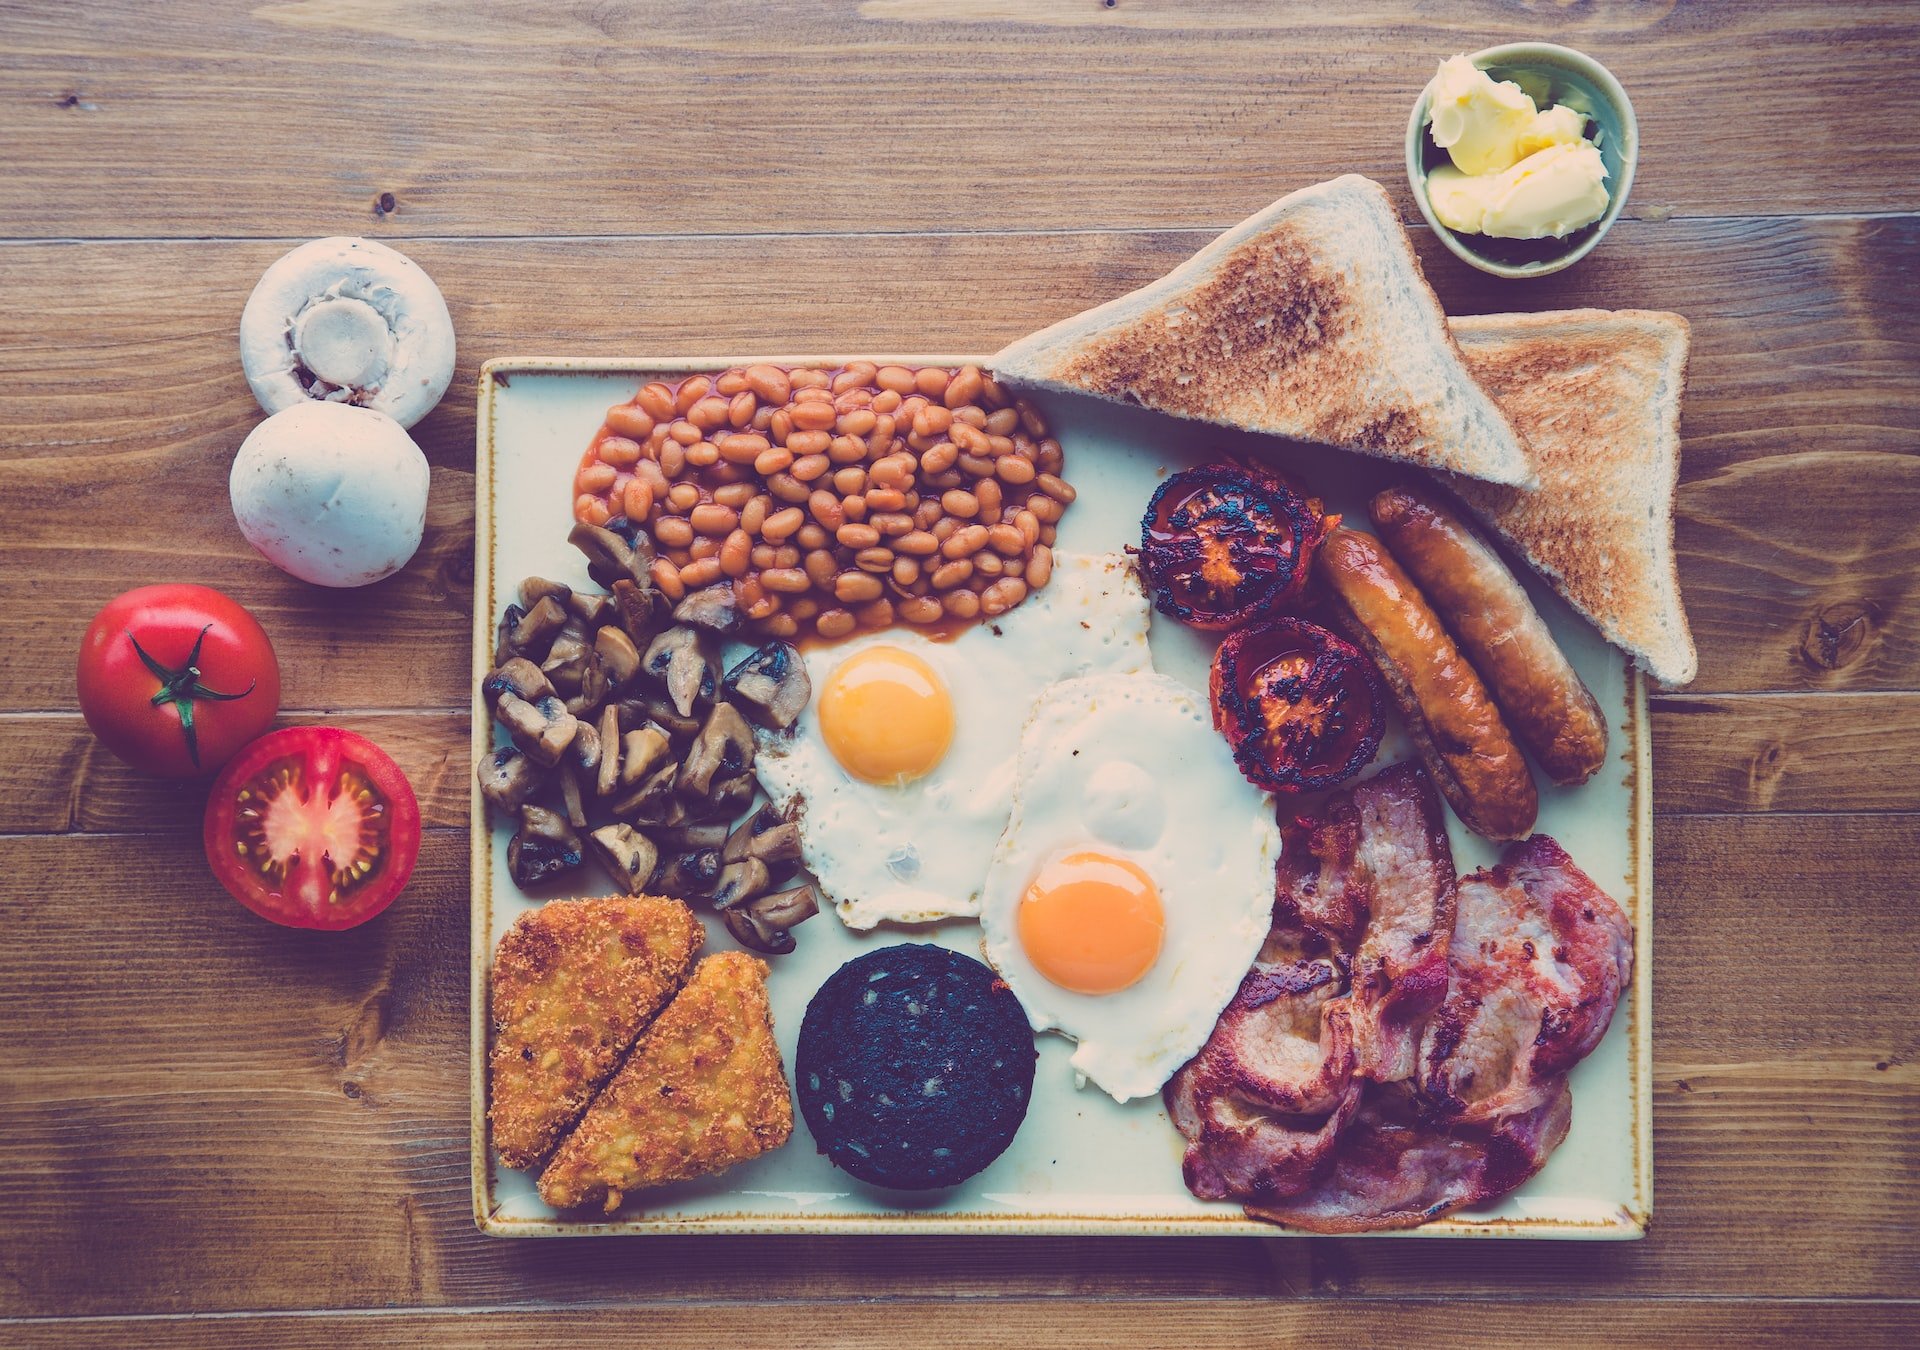 A full English breakfast (photo: Jonathan Farber)